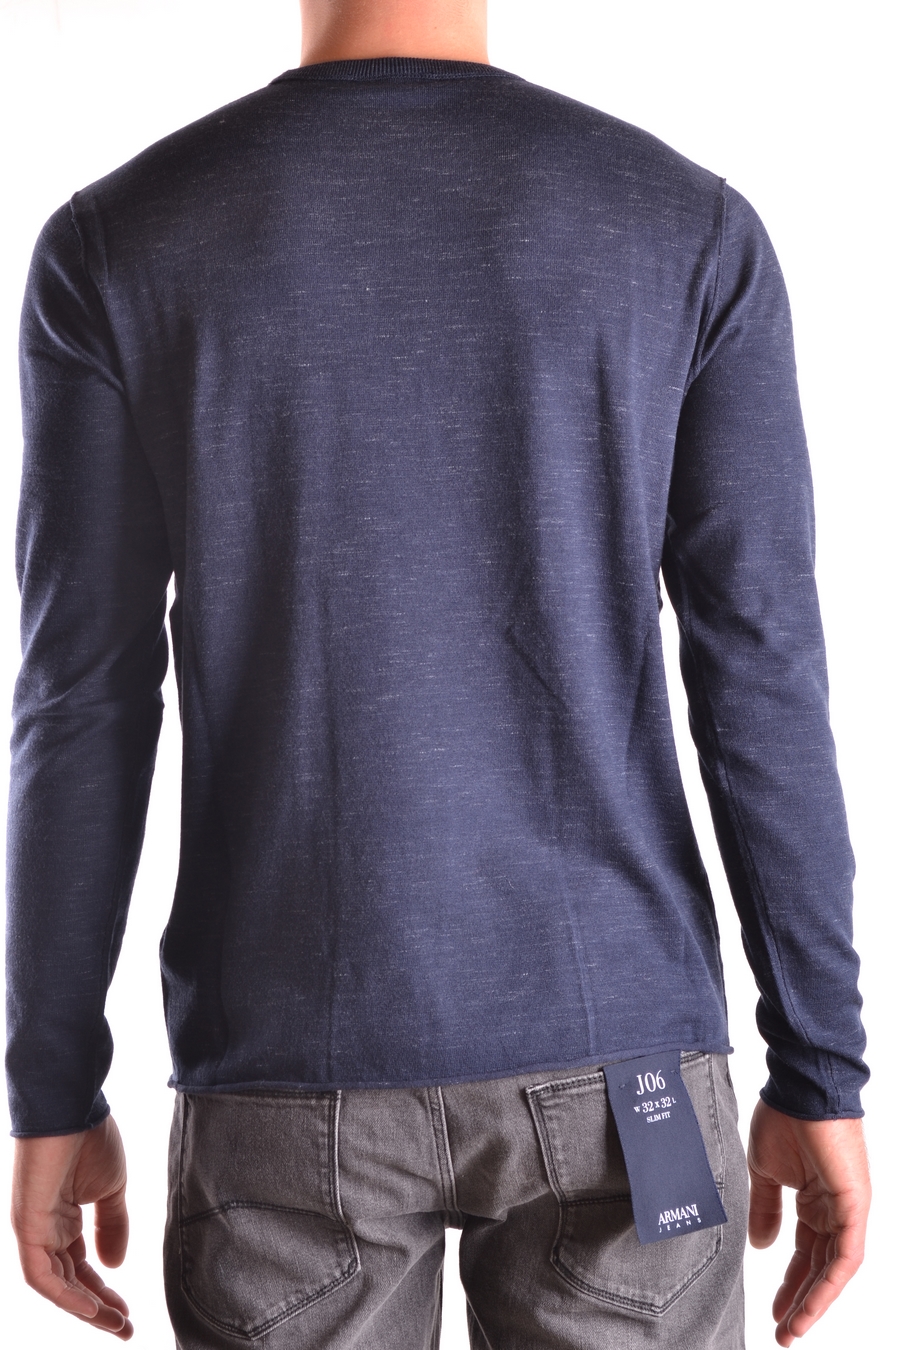 ARMANI JEANS Sweaters | ViganoBoutique.com